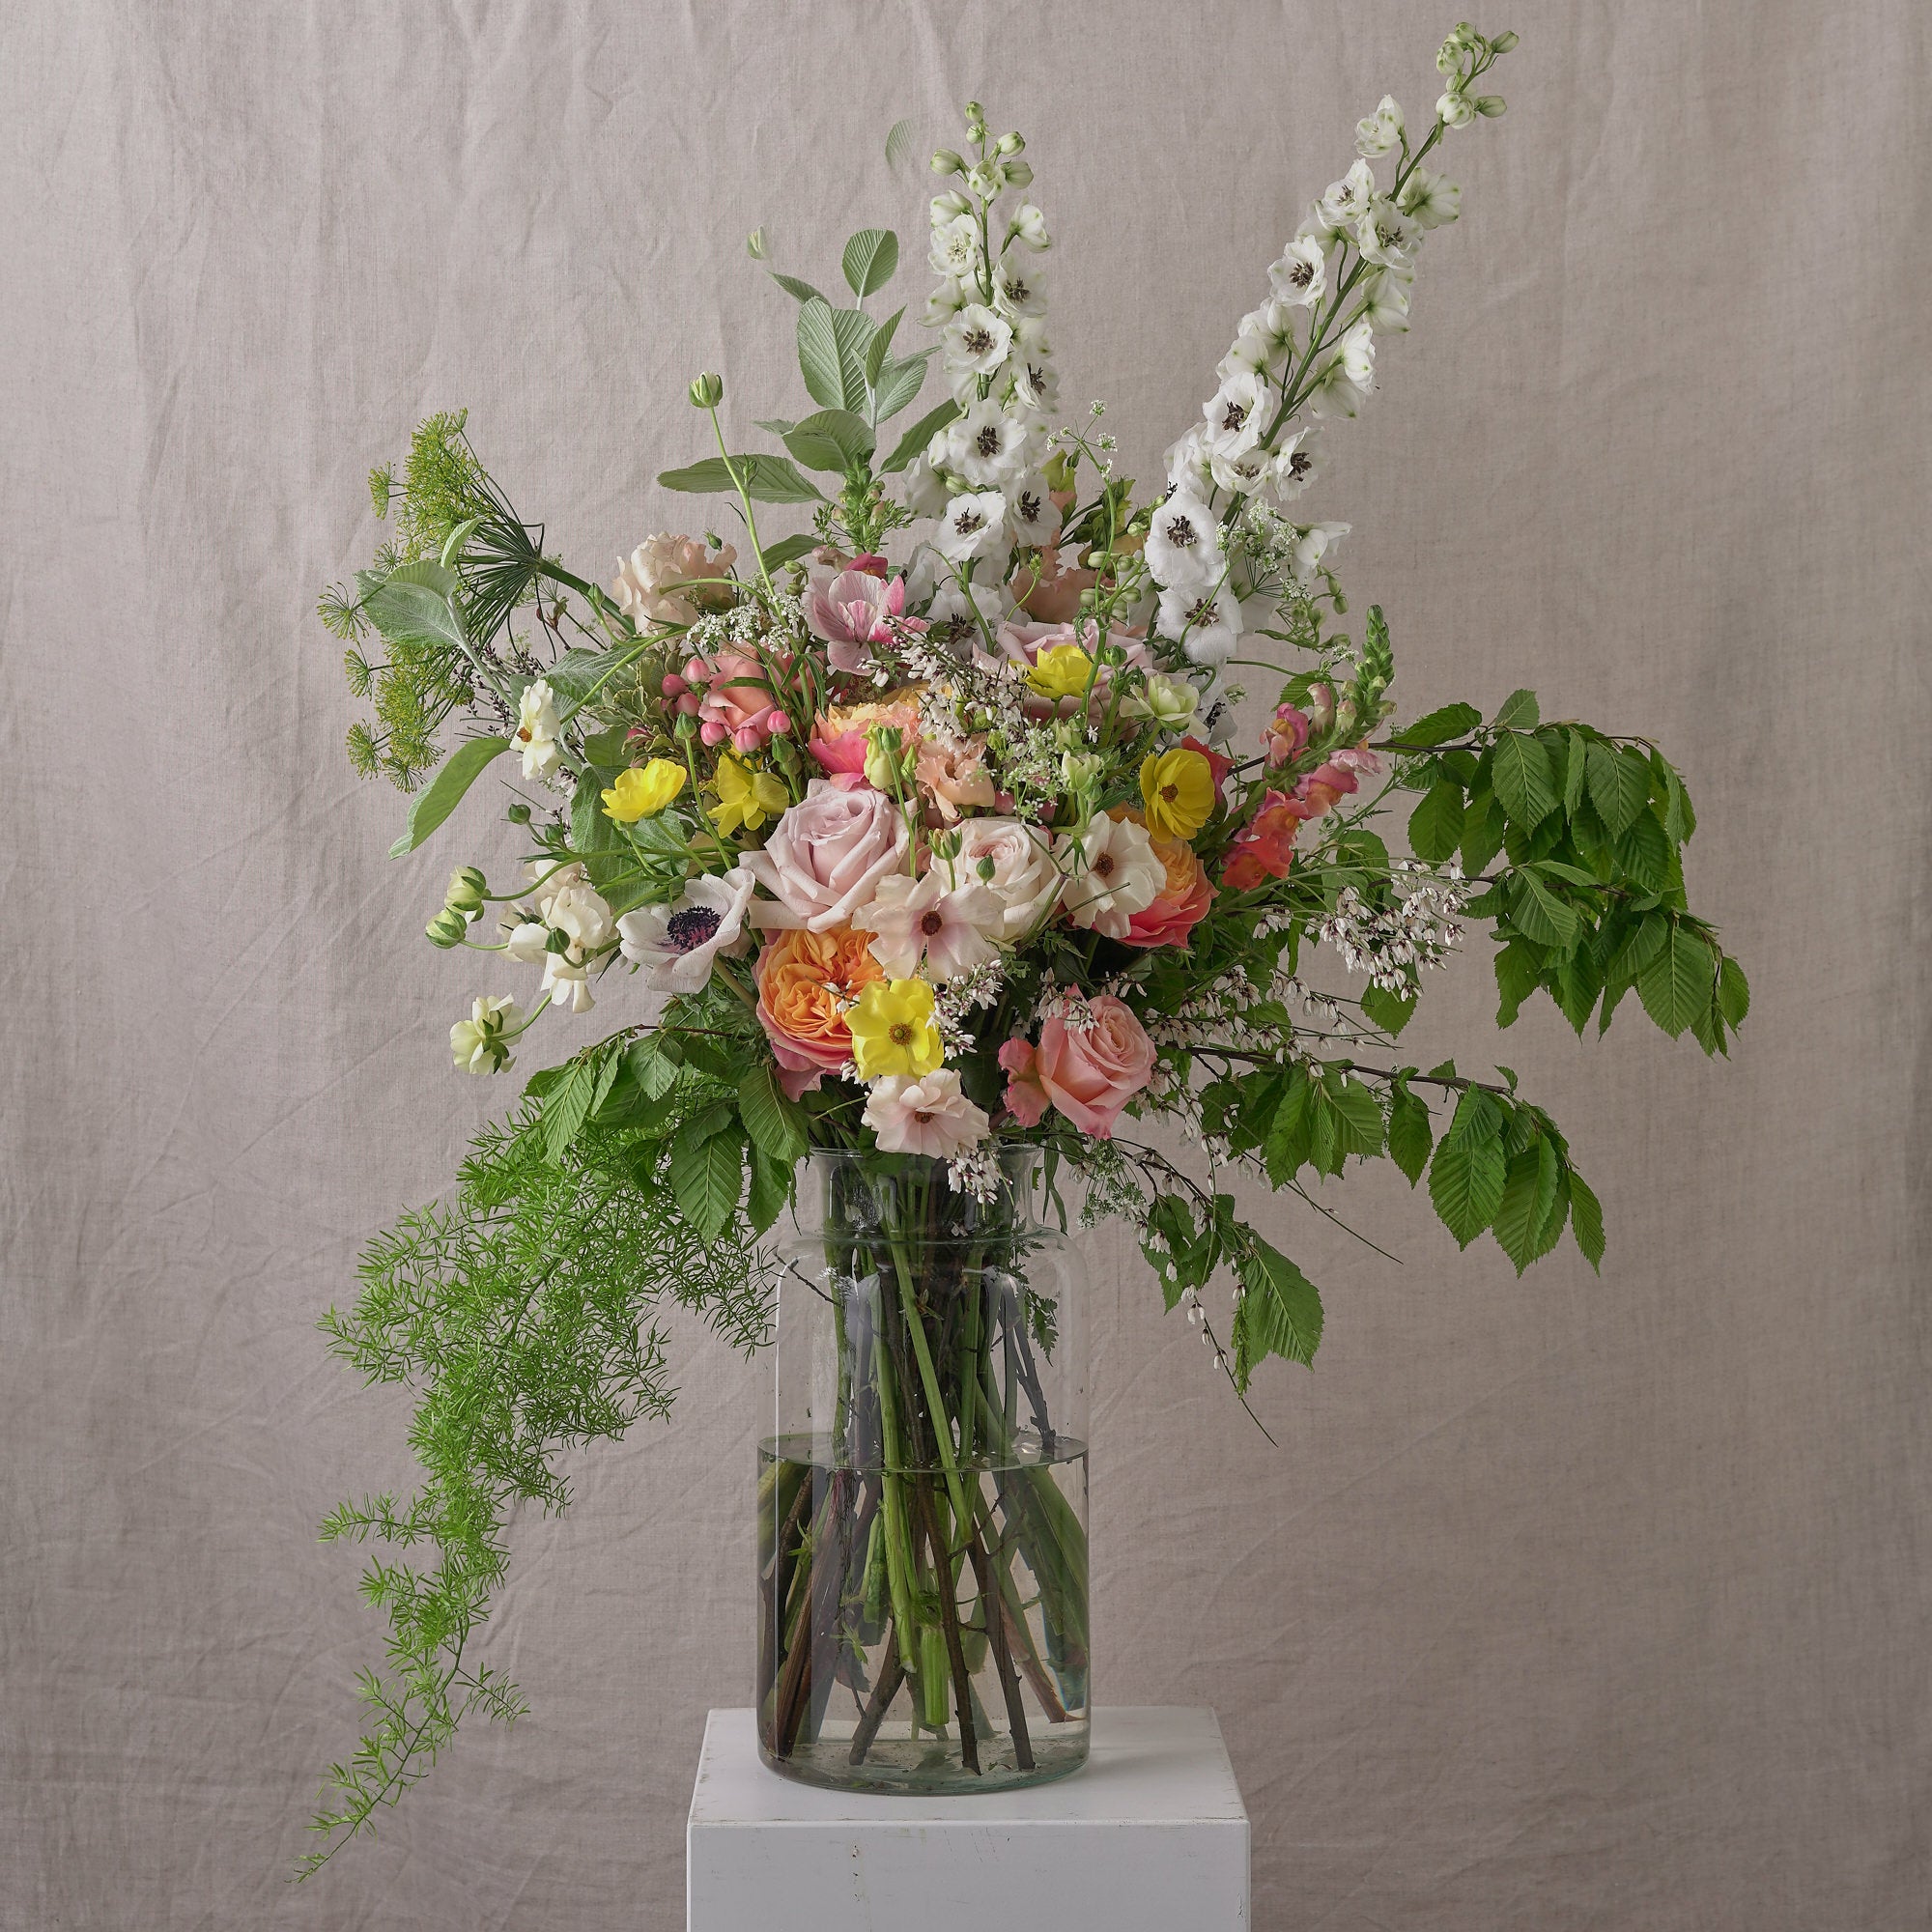 fresh and colourful vase arrangements for summer weddings by Botanique Workshop London